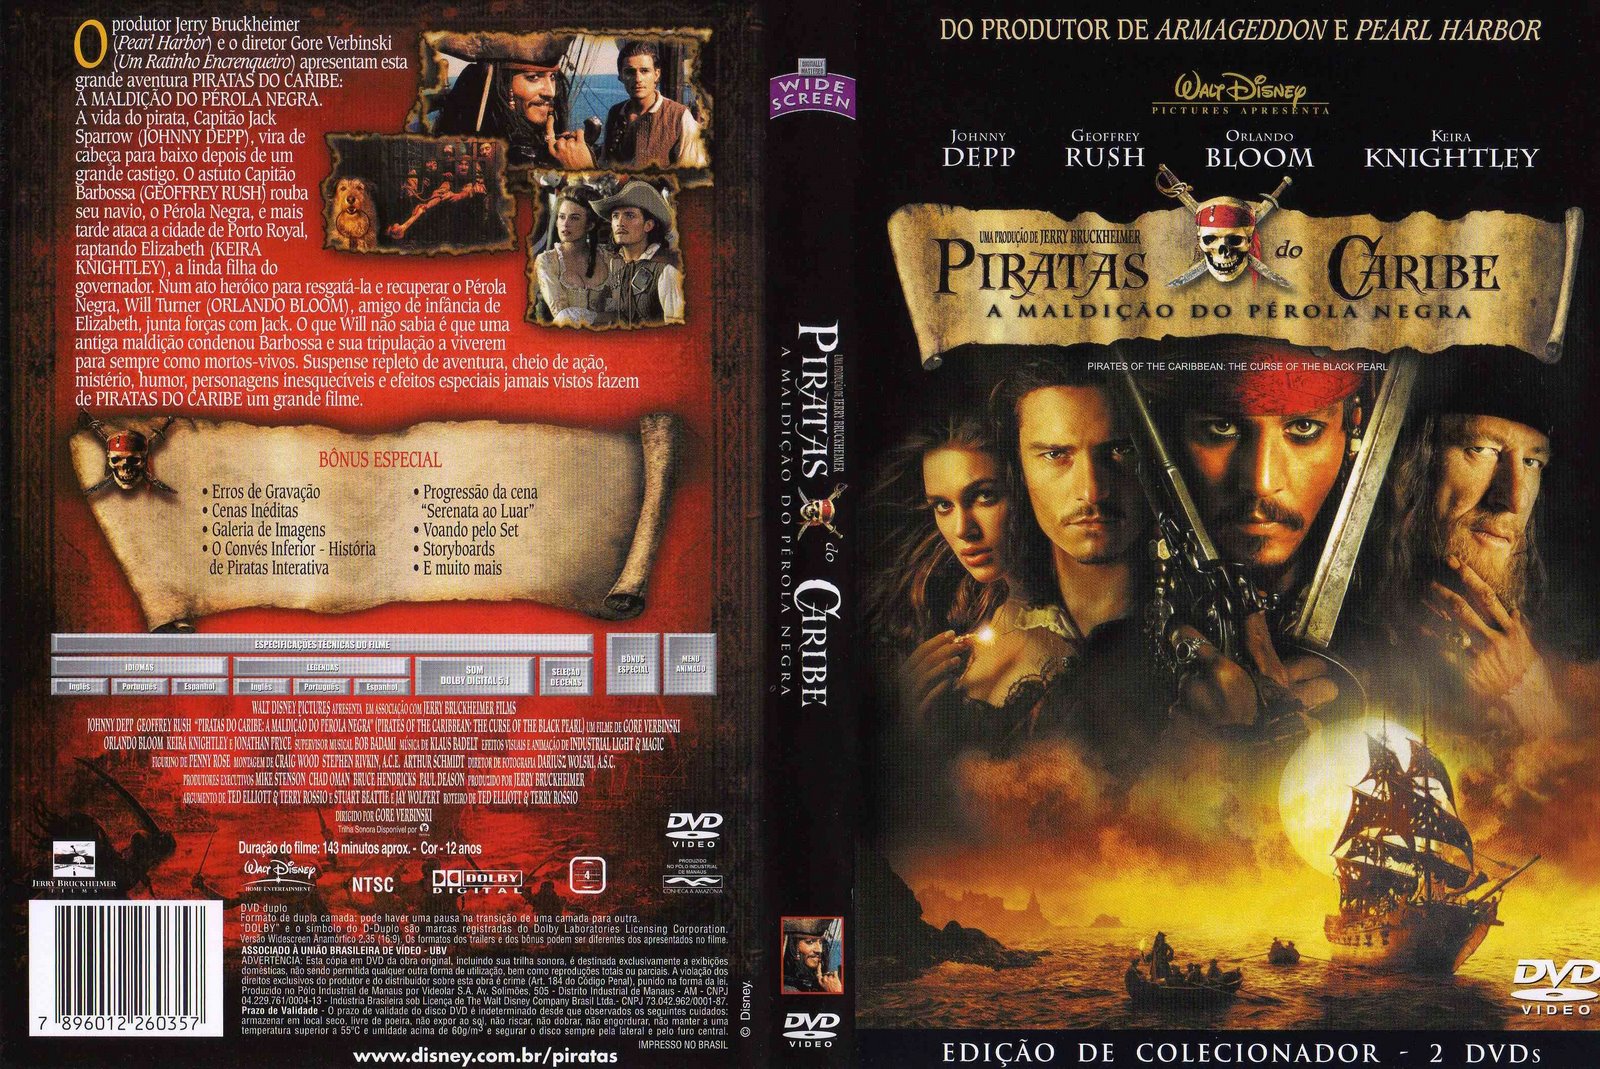 Piratas do caribe 2003 legendado blu ray download torrent full